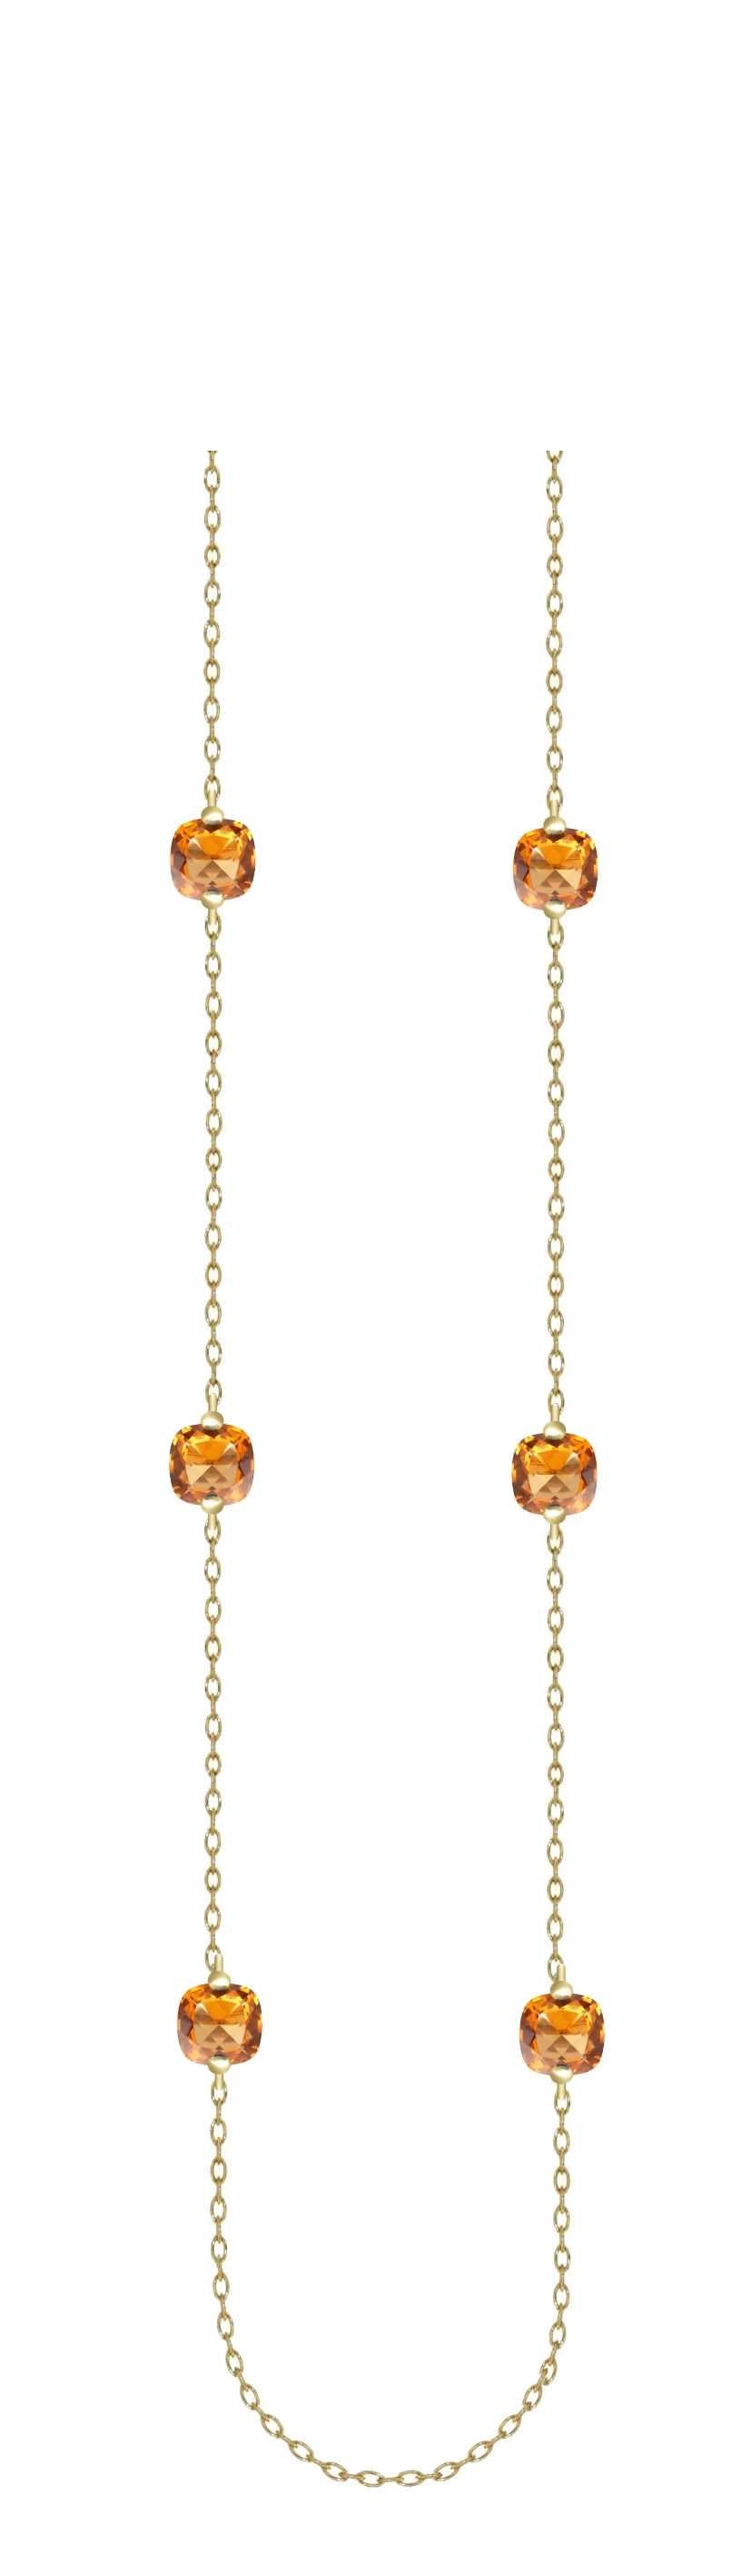 Pitti и Sisi ожерелье Радуга стерлингового серебра 925 отделка PVD желтого золота кварцевый коньяк CL 9594G/087